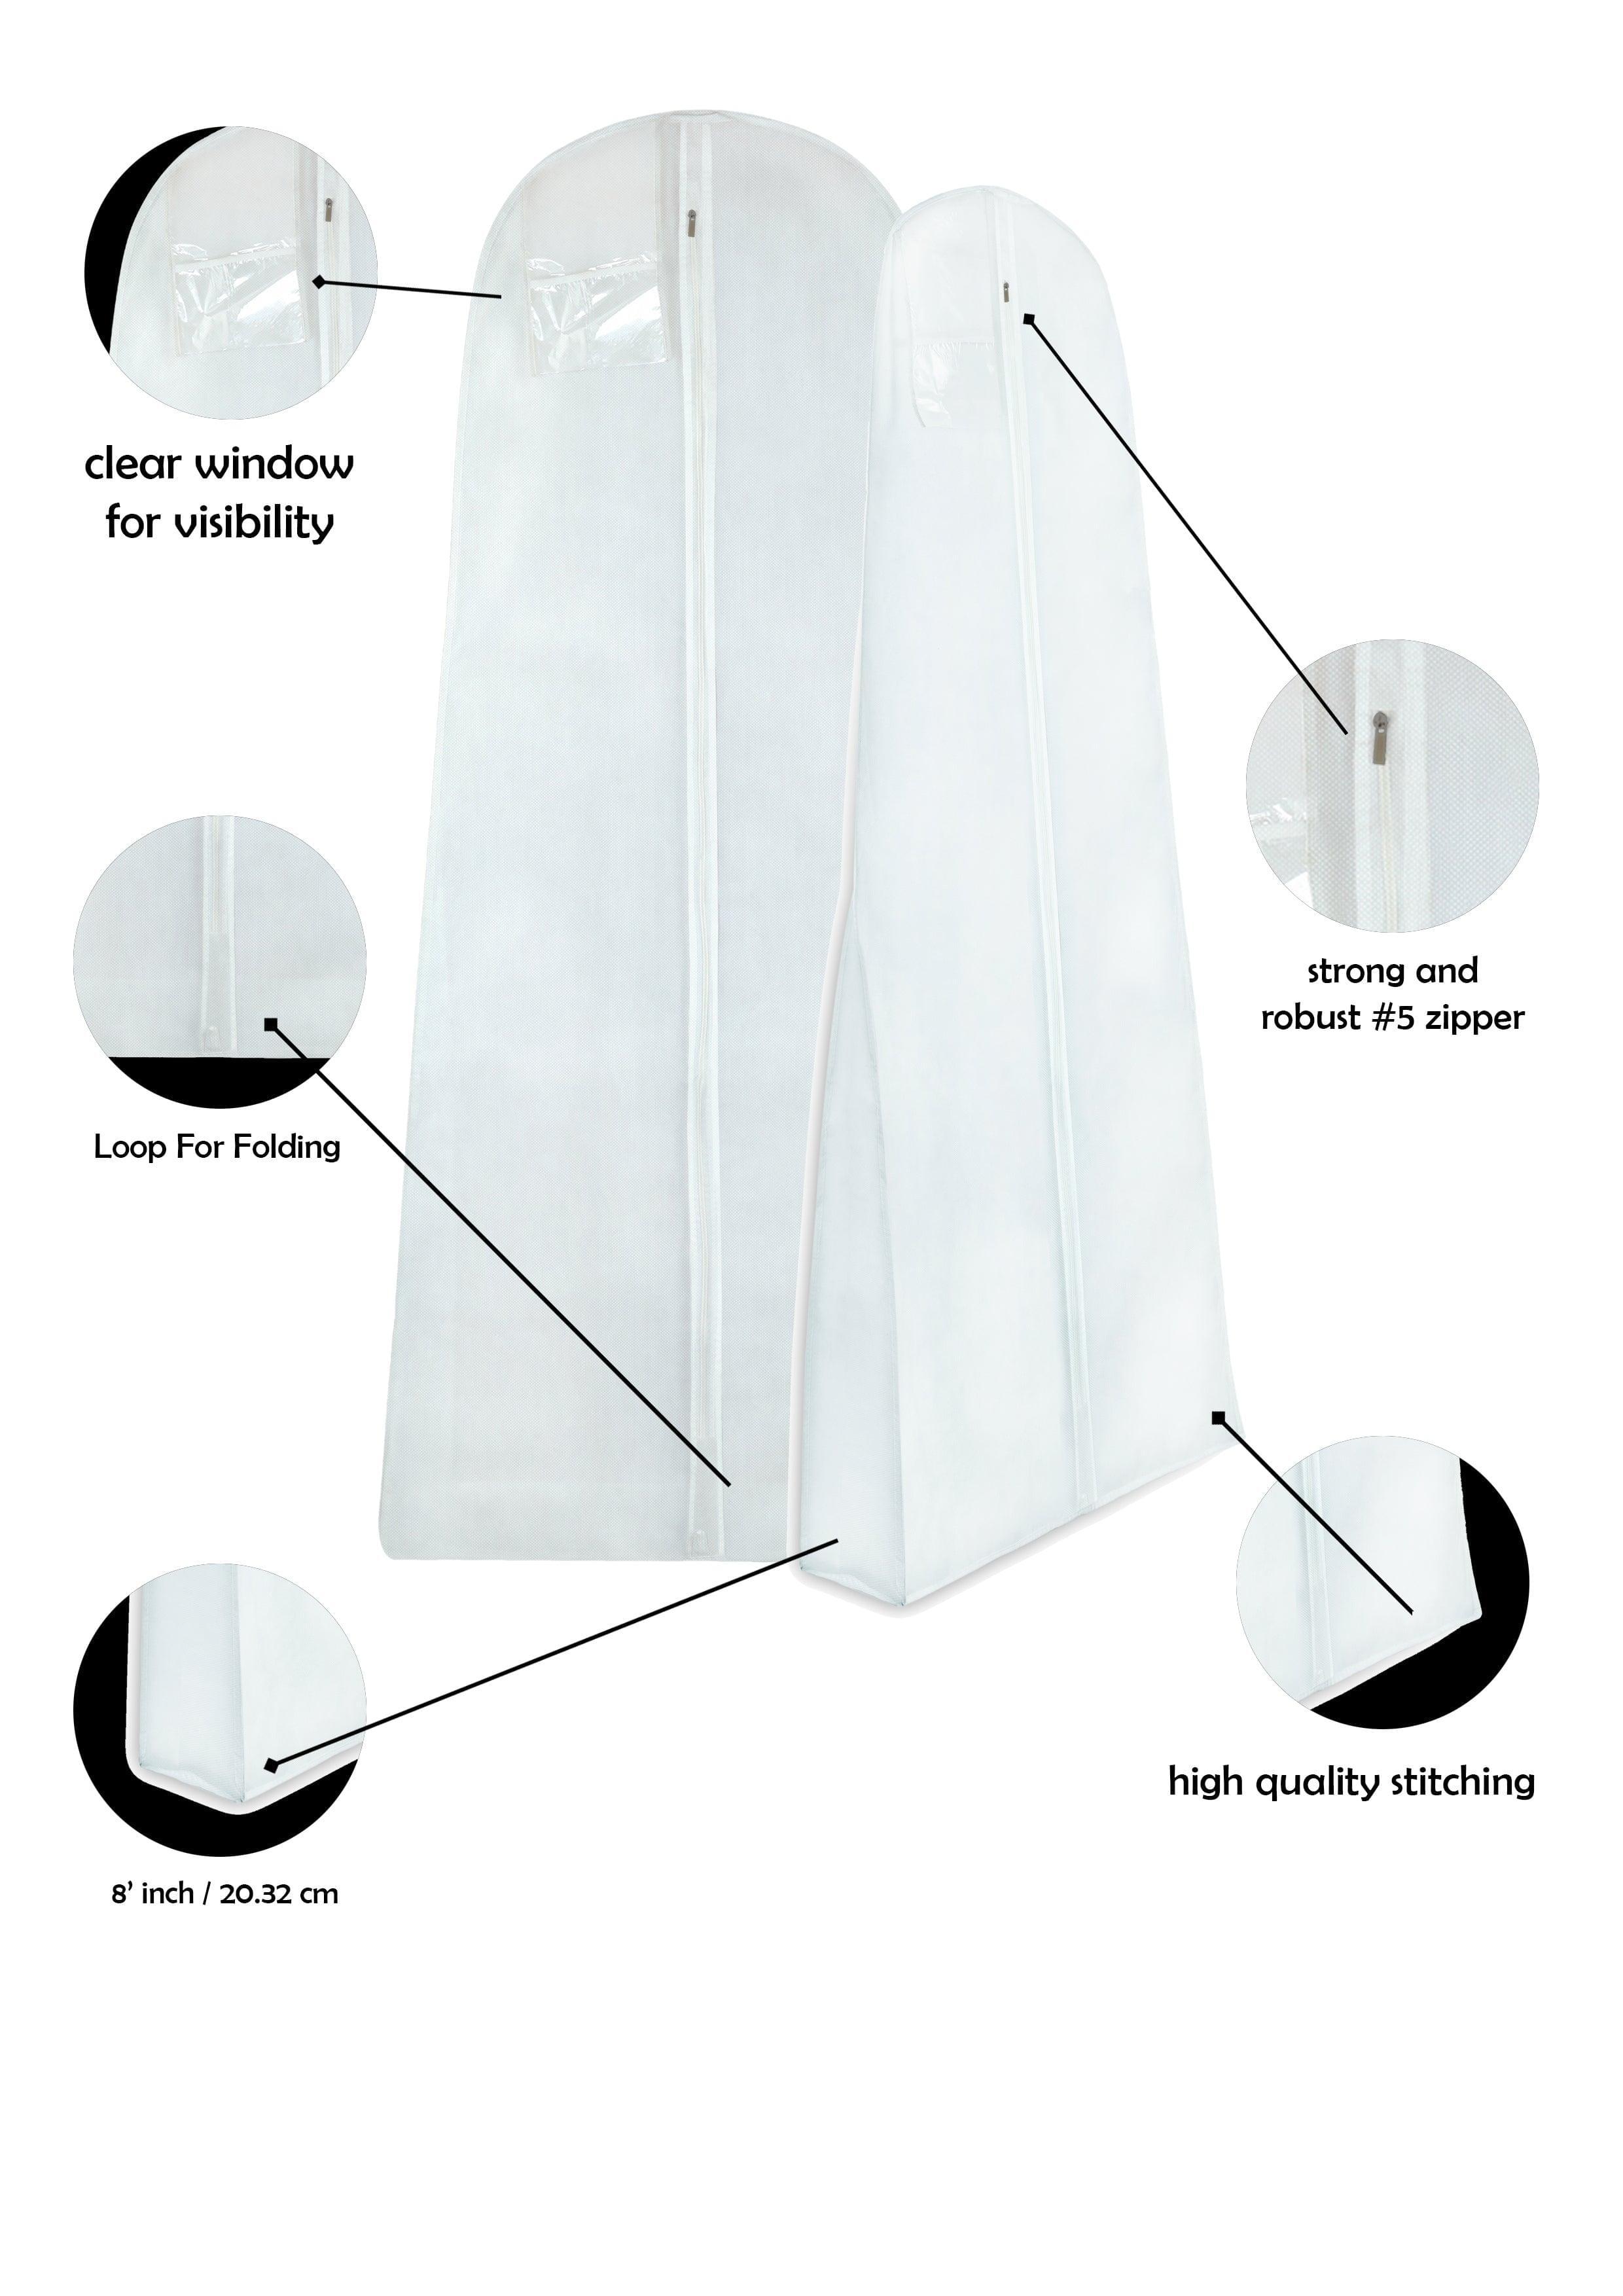 Standard 8" Gusset Bridal Dress Cover Bags - Wedcova UK Ltd